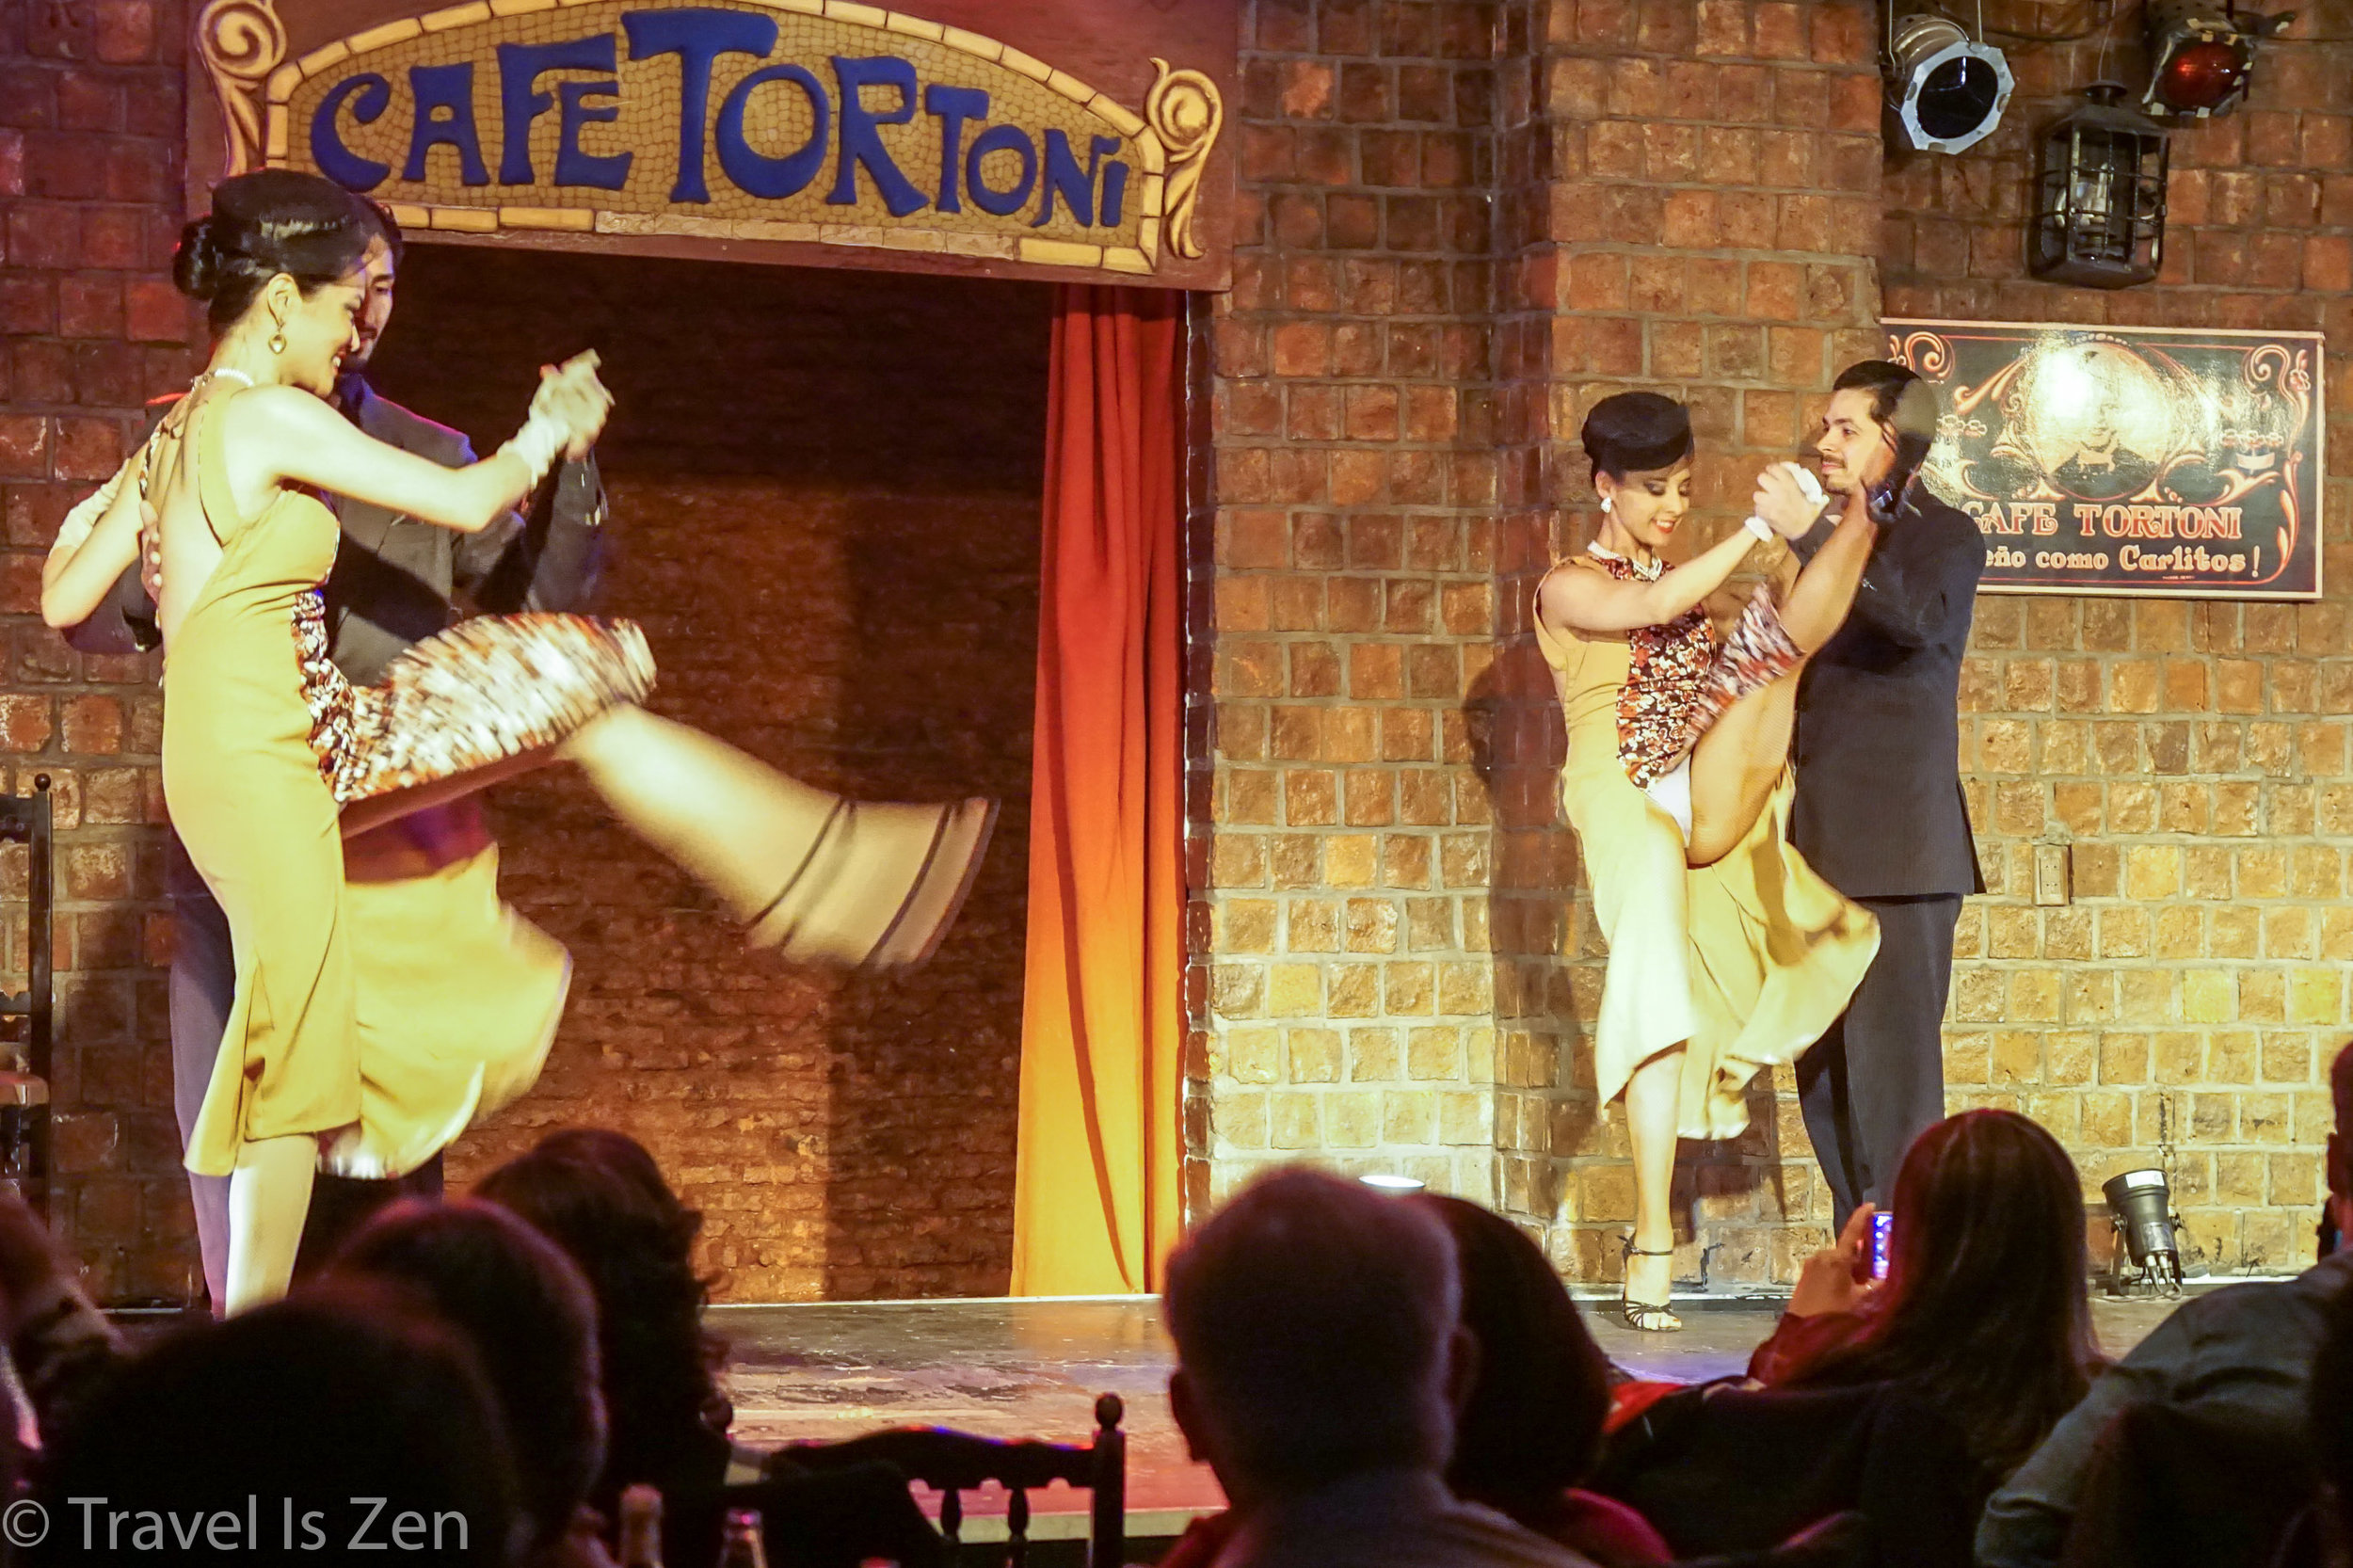 Tango show, Cafe Tortoni